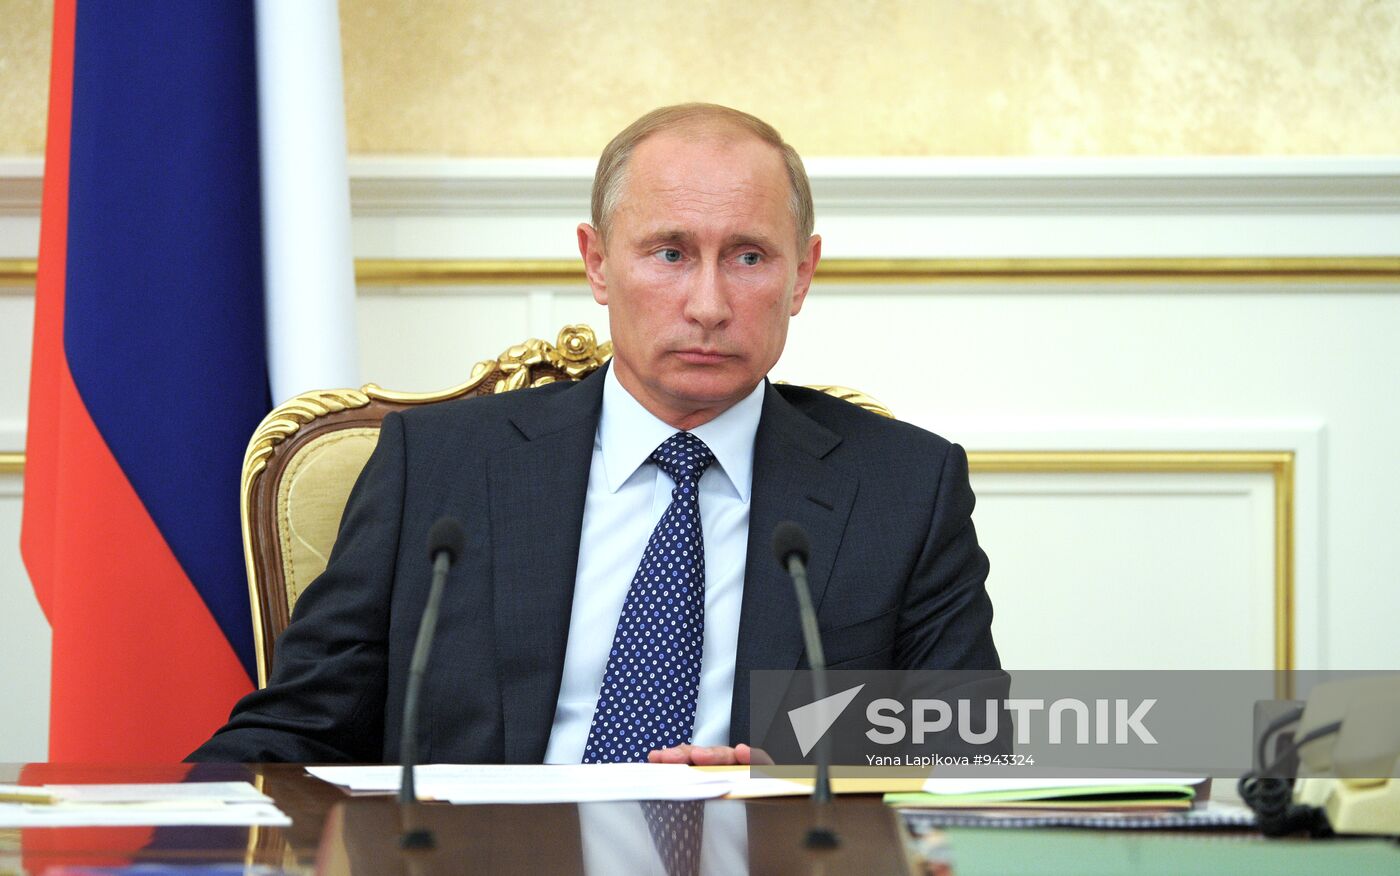 Vladimir Putin chairs session of Russian government presidium